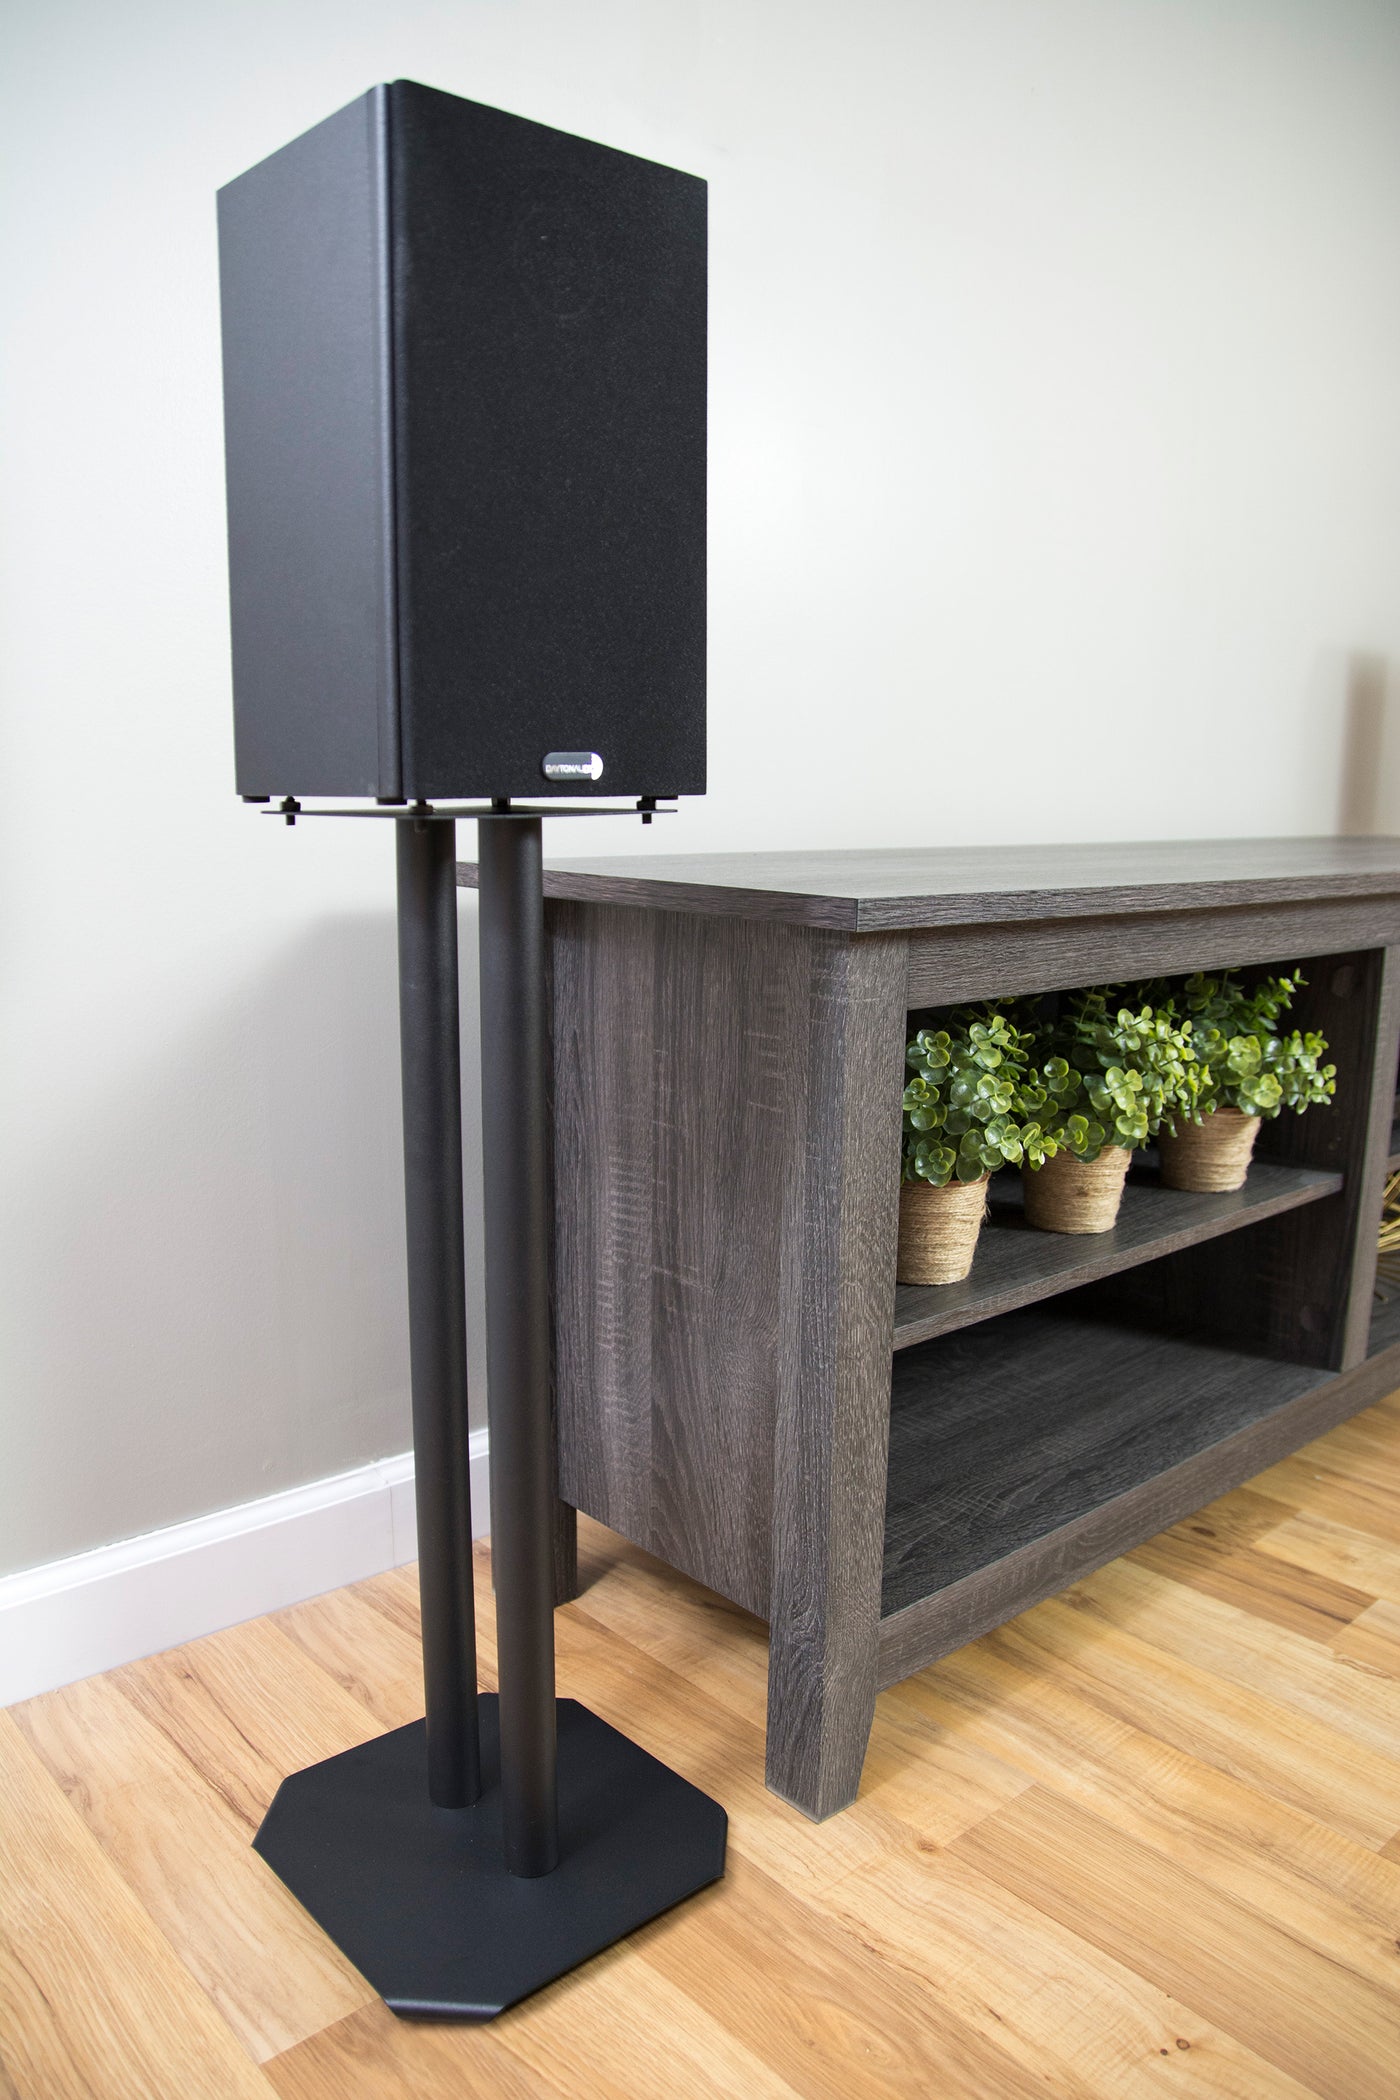 Tall surround sound speaker stands from VIVO.